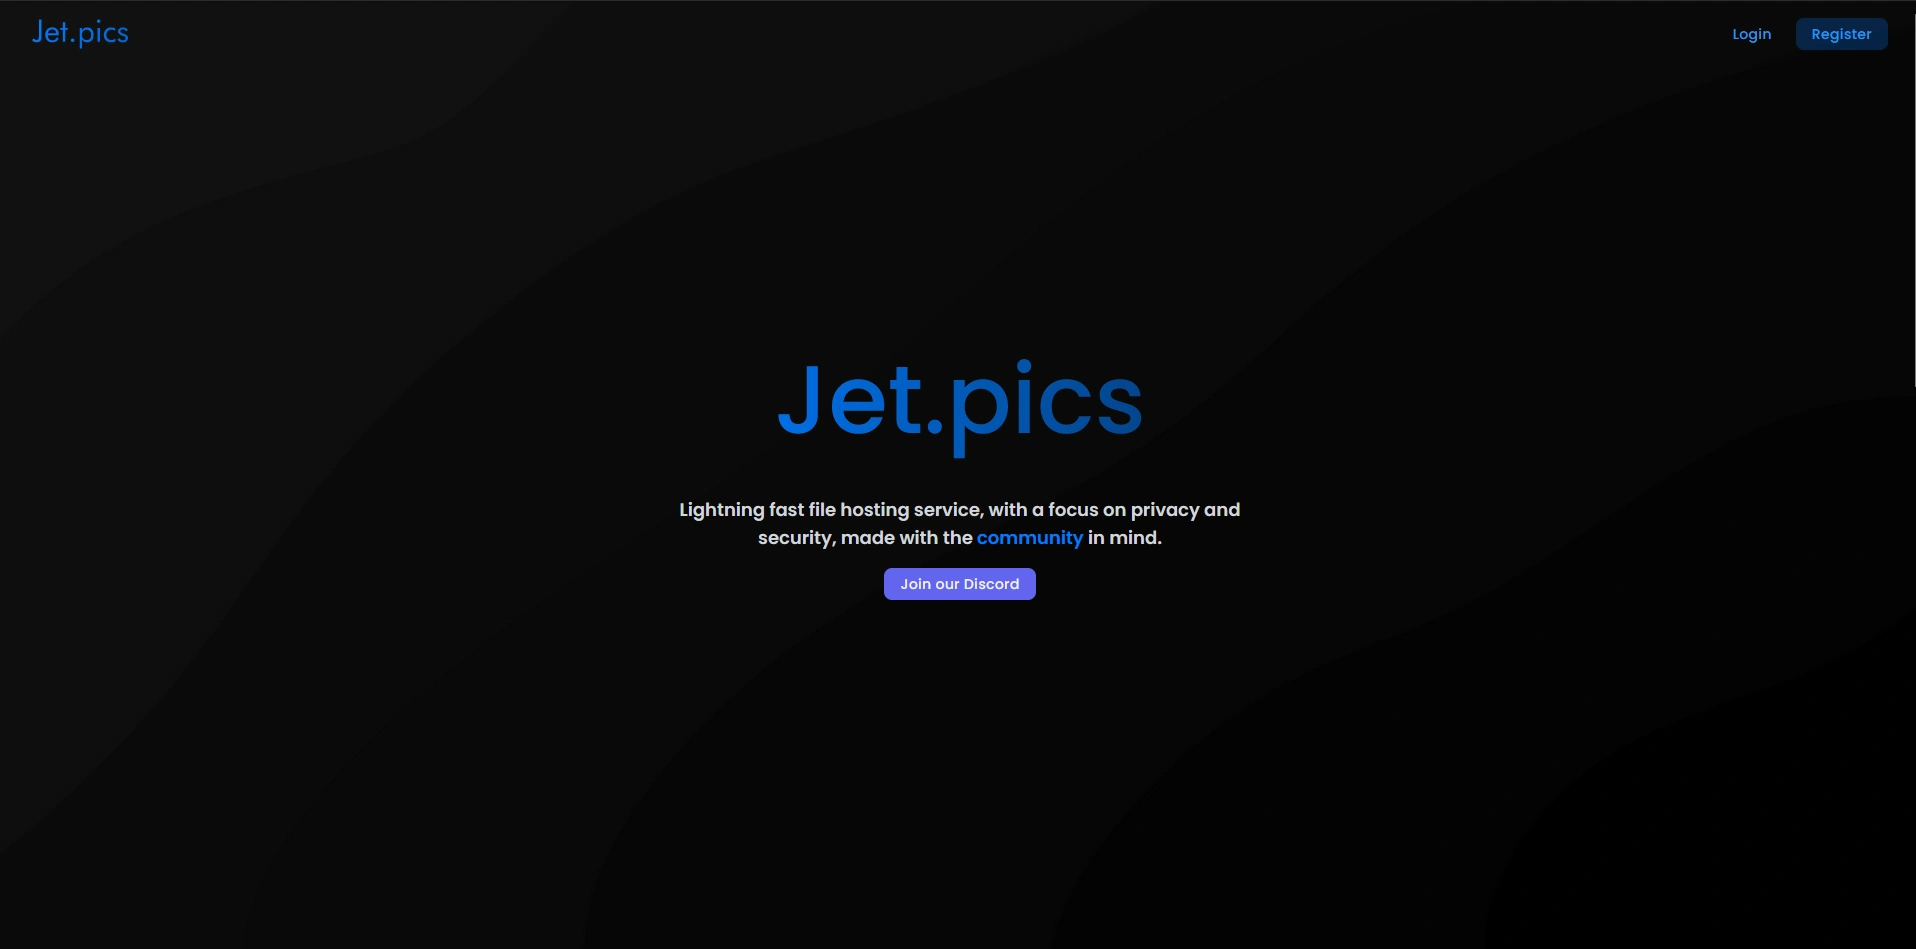 Jet.pics landing page